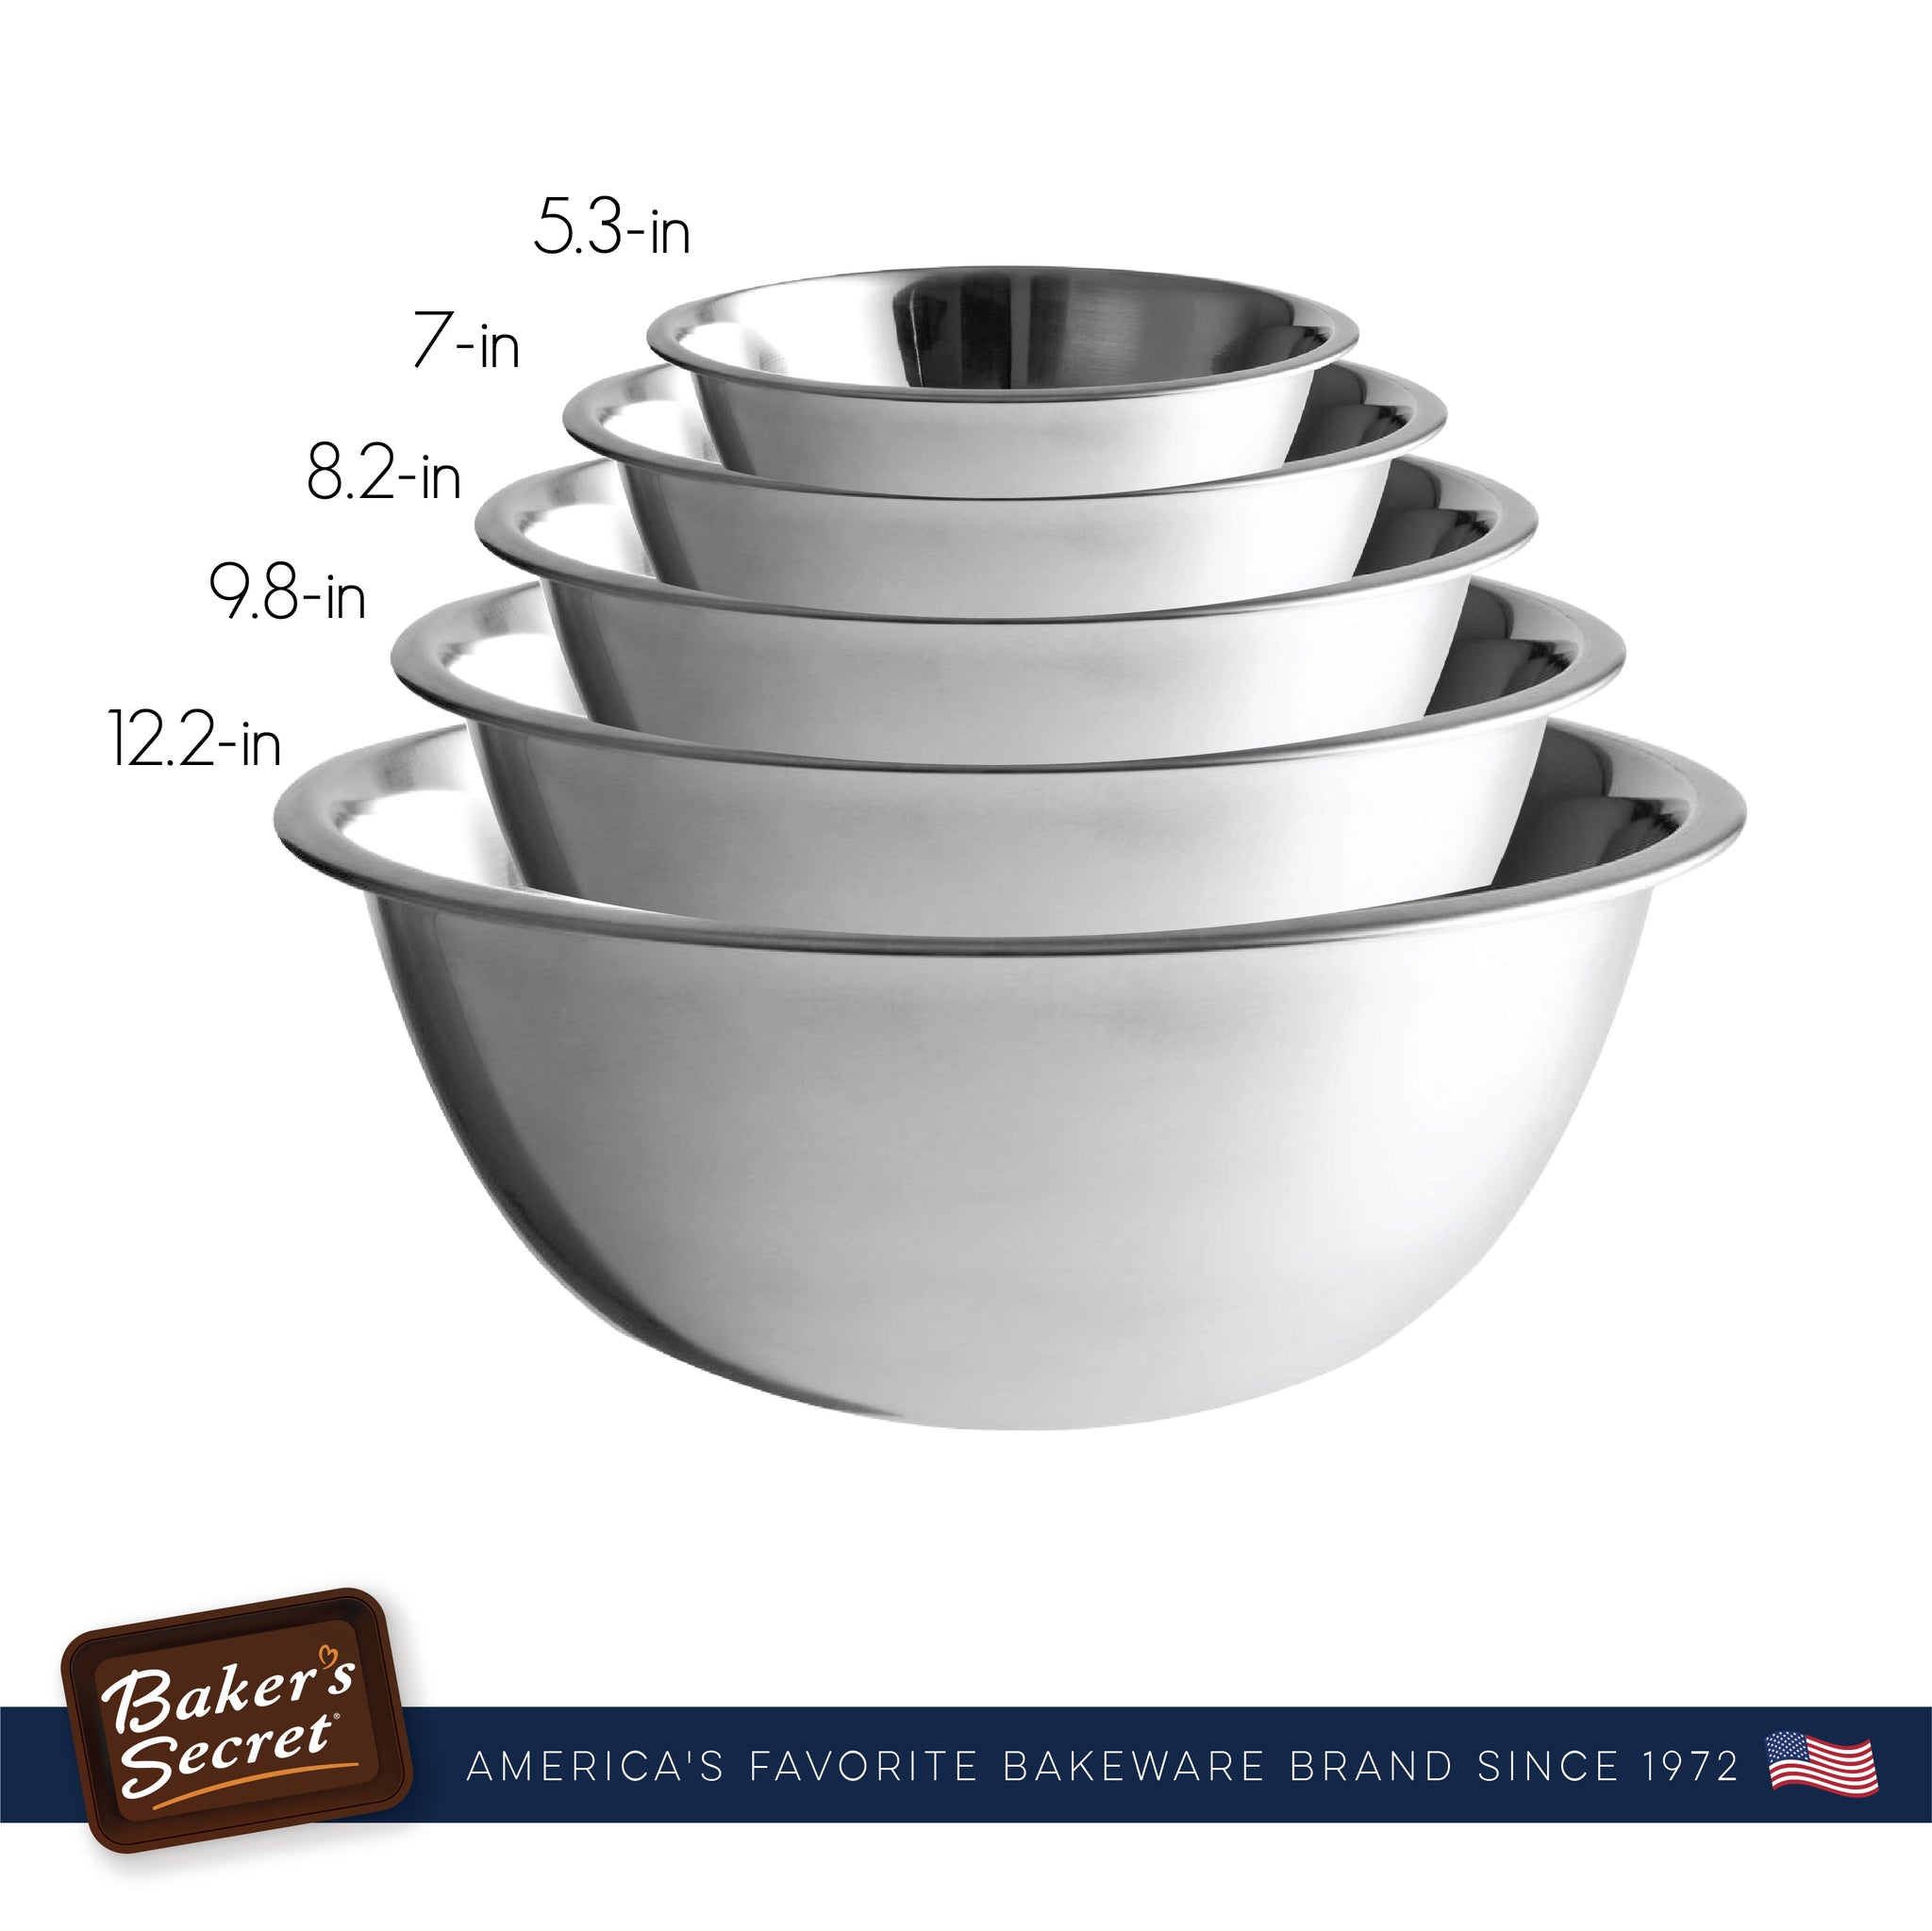 Choice Standard Stainless Steel Standard Mixing Bowl Set - 5/Set